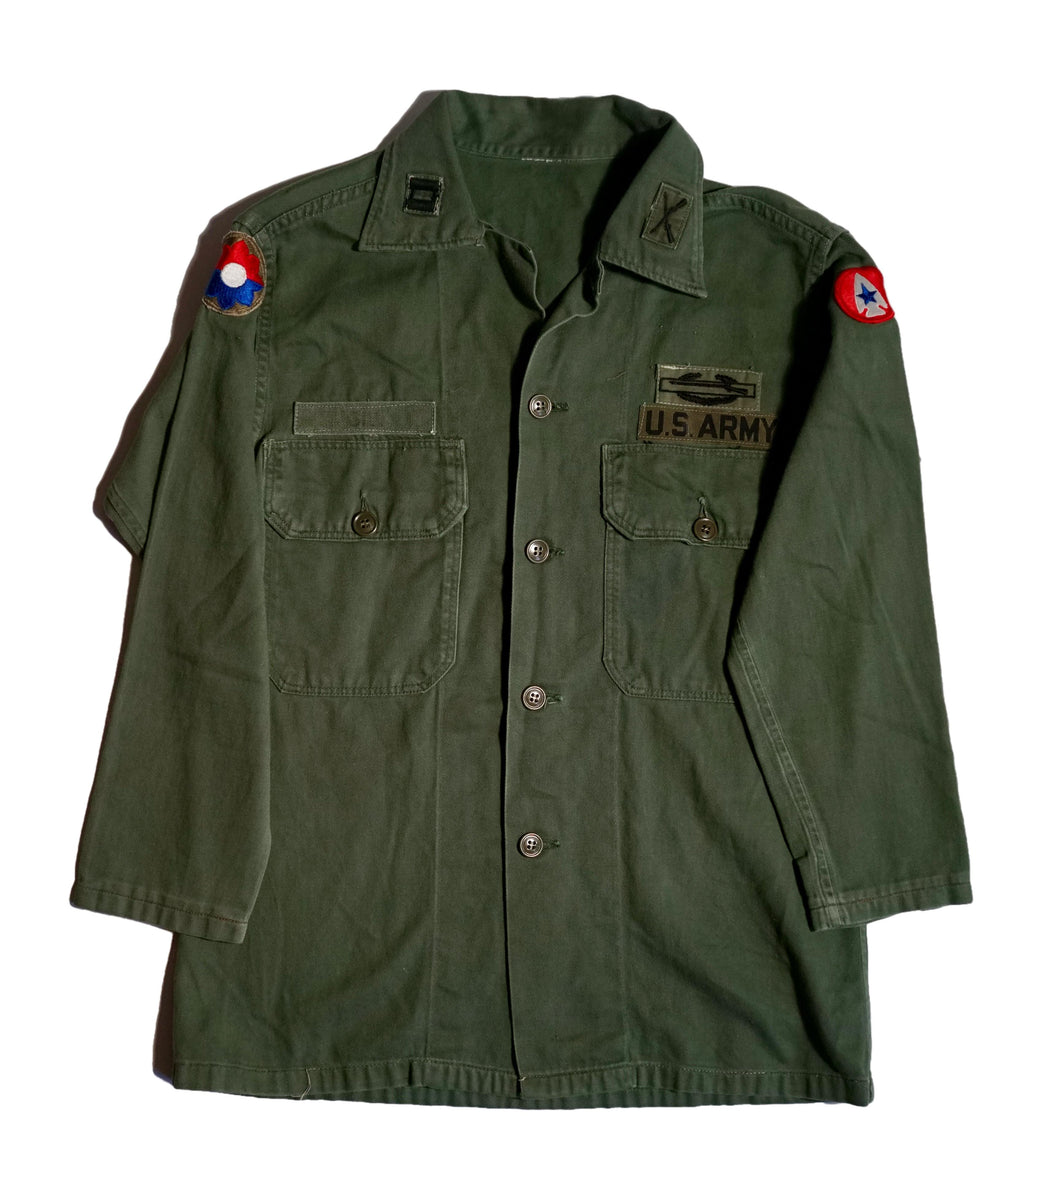 Vintage Vietnam OG-107 Combat Development Command Shirt